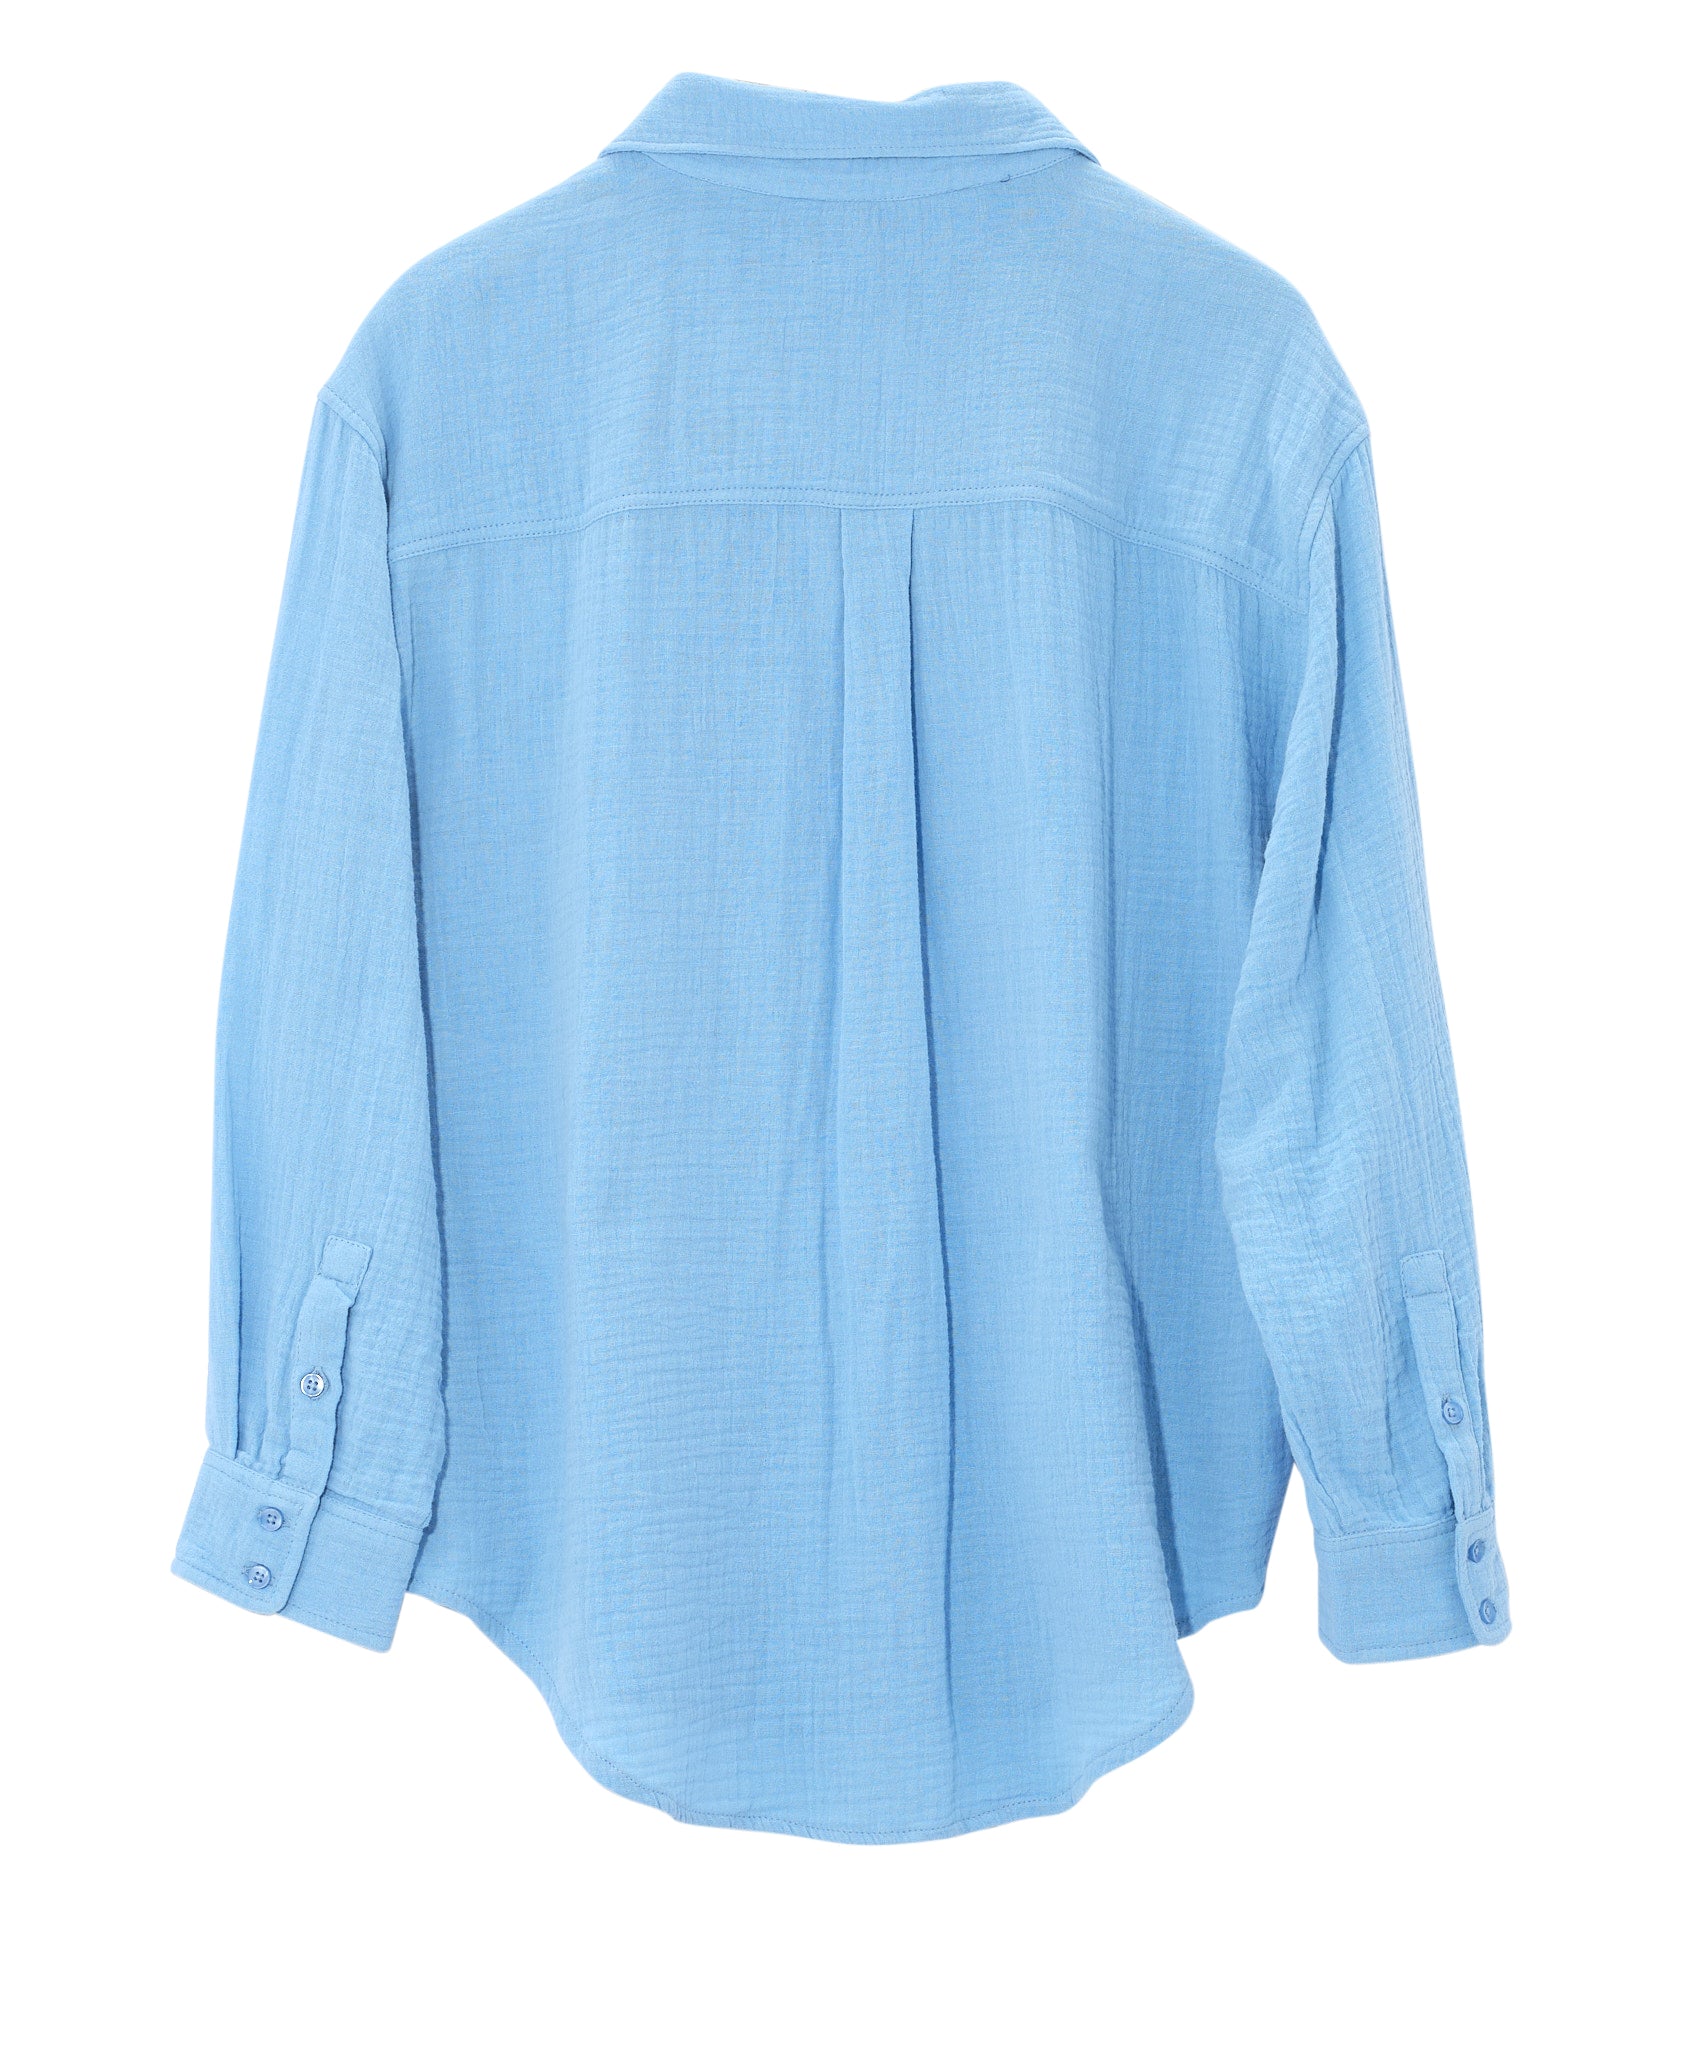 Supersoft Gauze Boyfriend Shirt in color capri - back of garment.